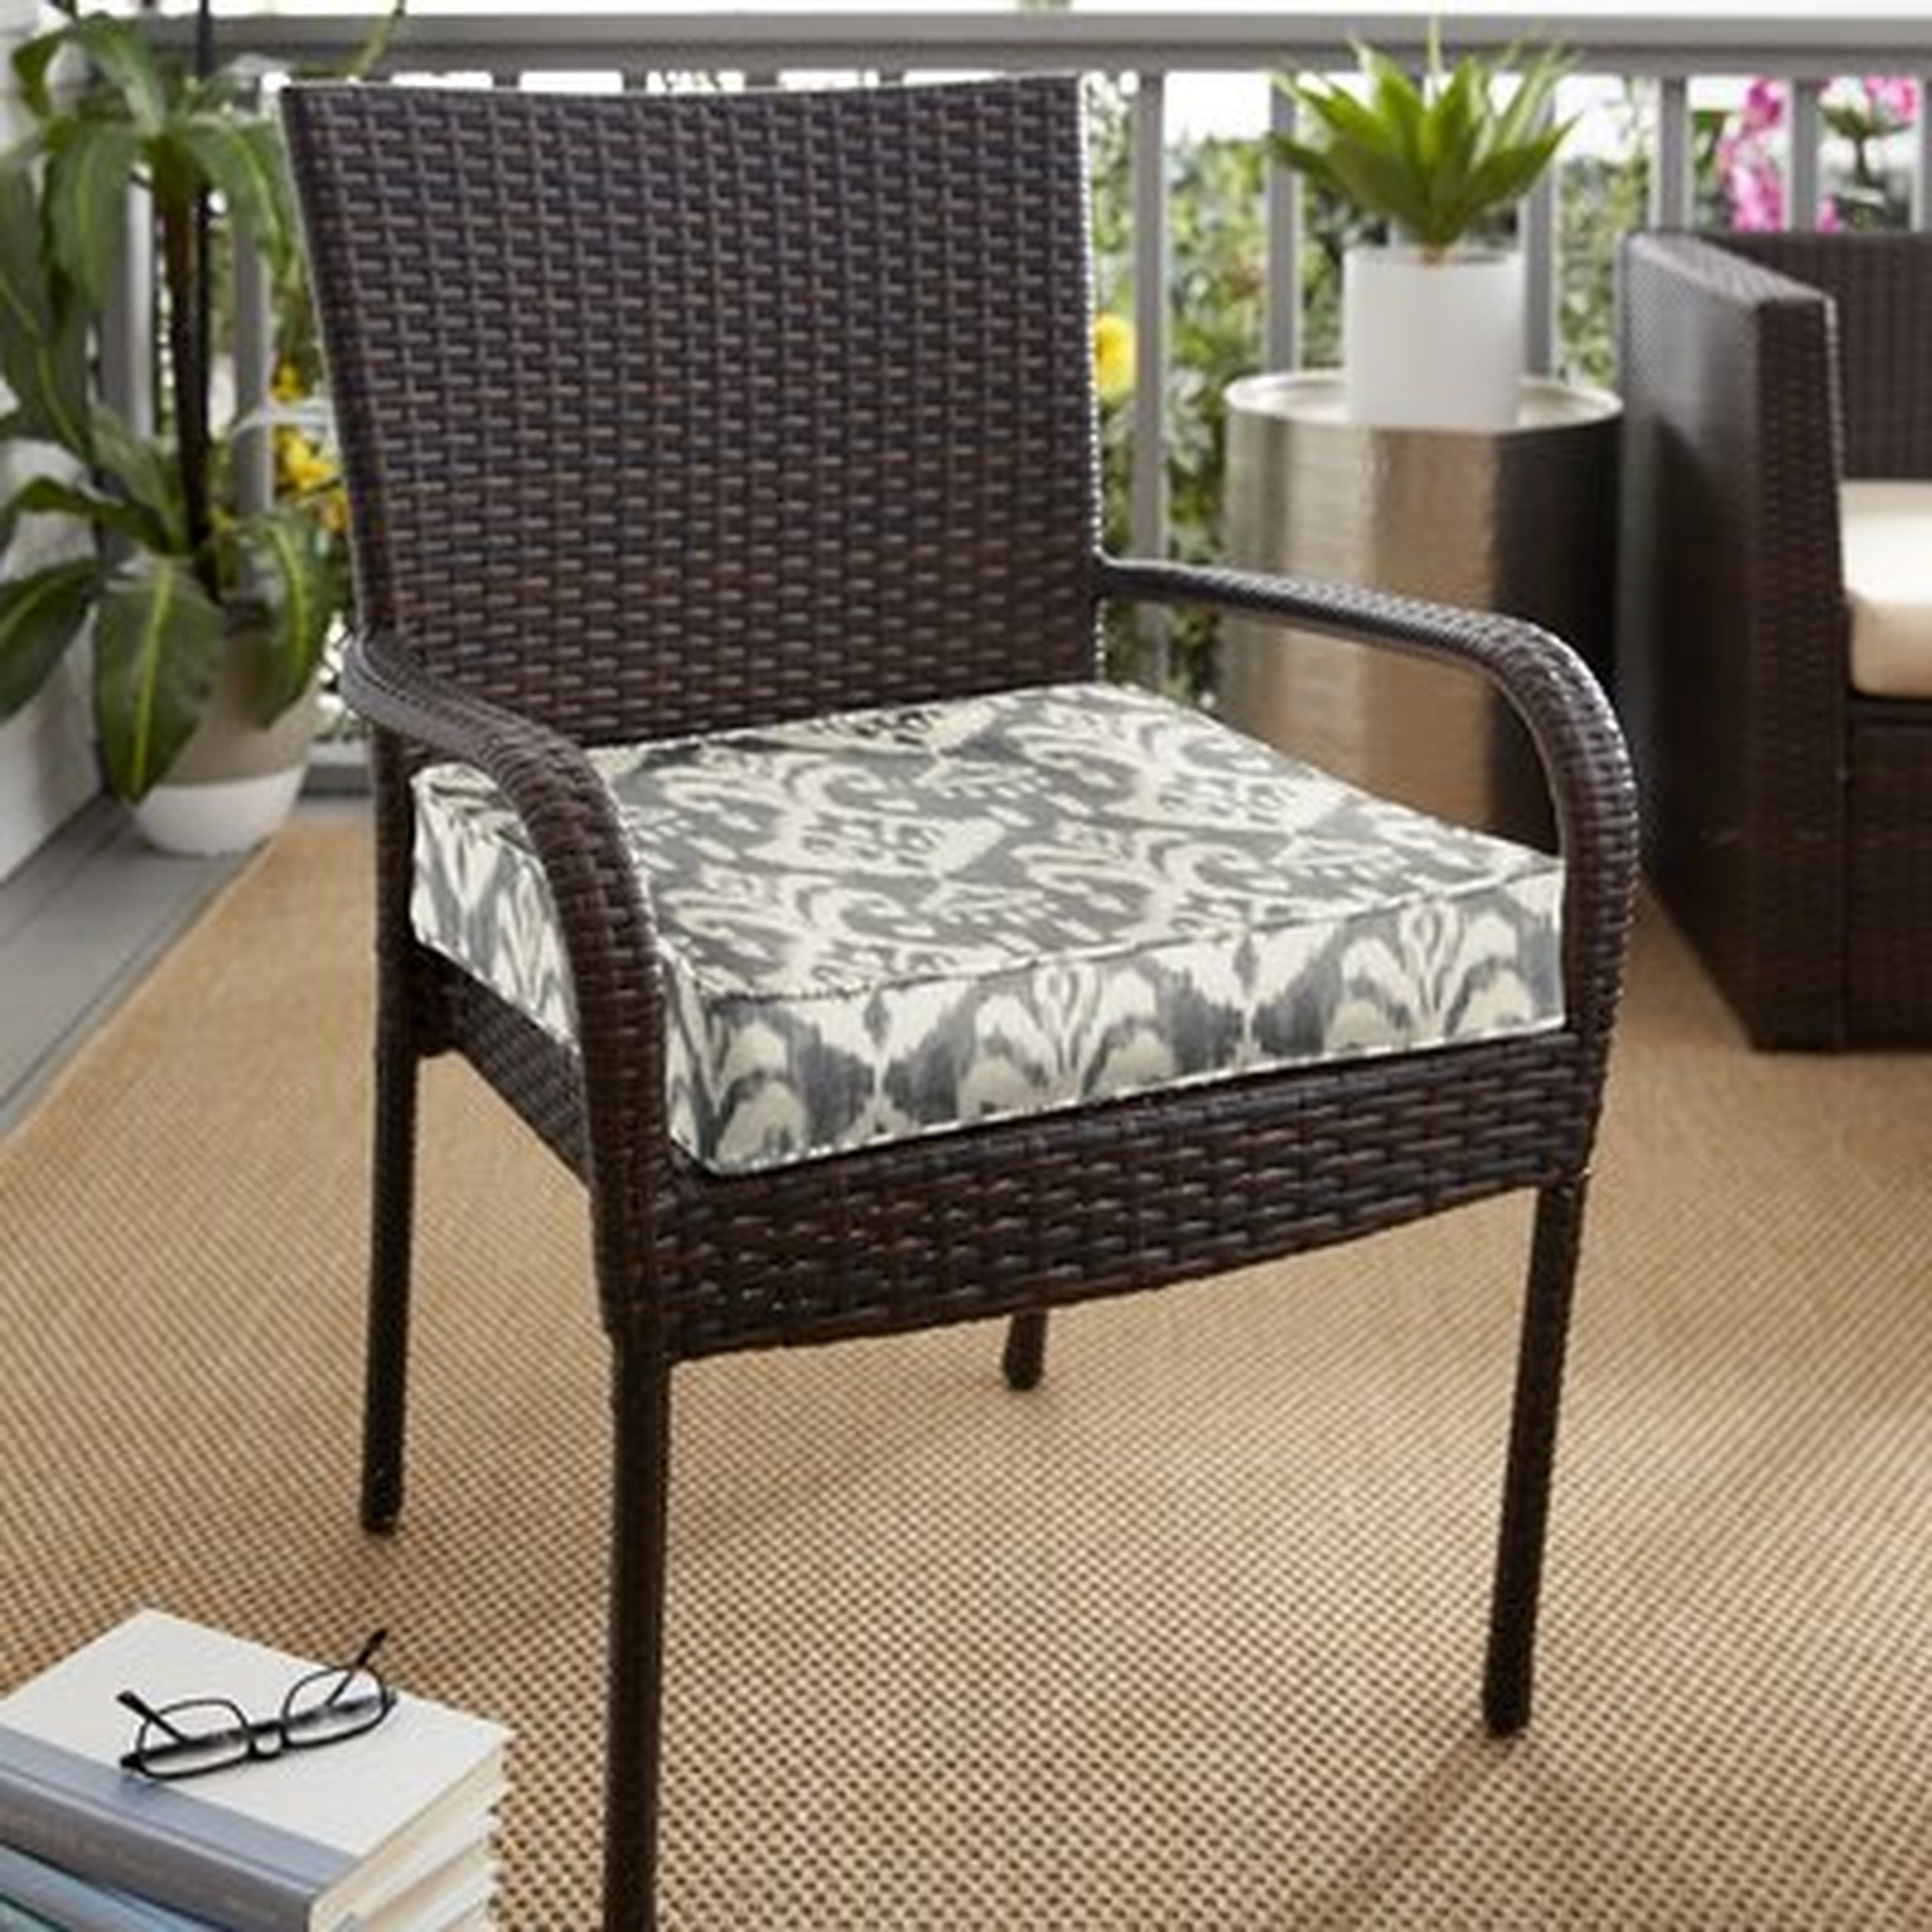 Indoor/Outdoor Dining Chair Cushion - Birch Lane